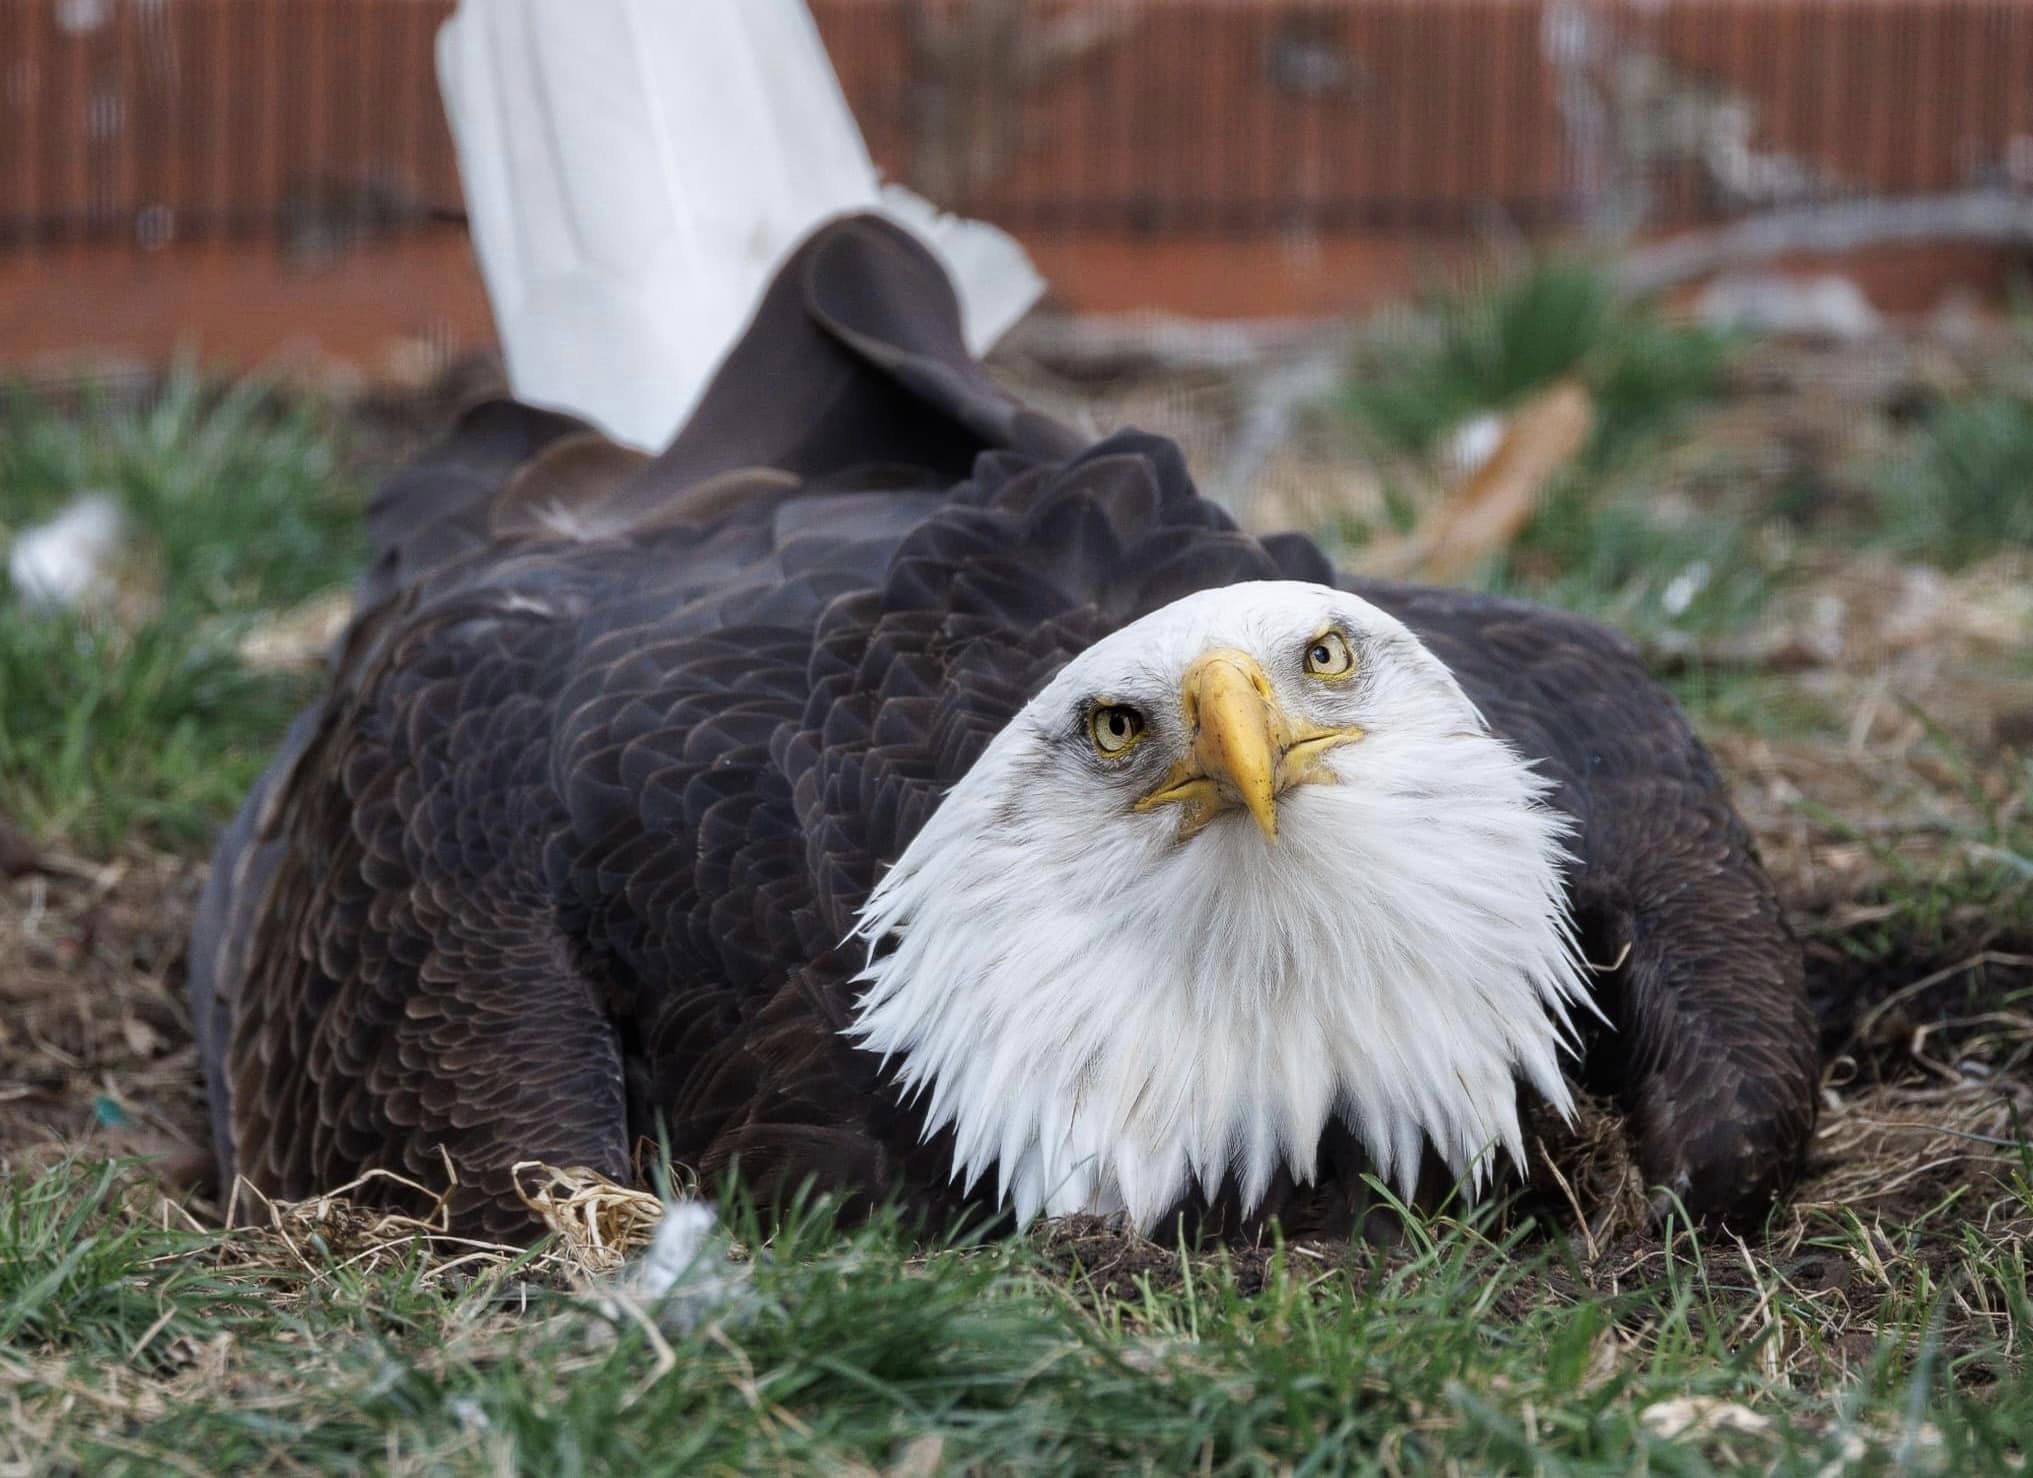 A flightless bald eagle in Missouri incubates a rock.